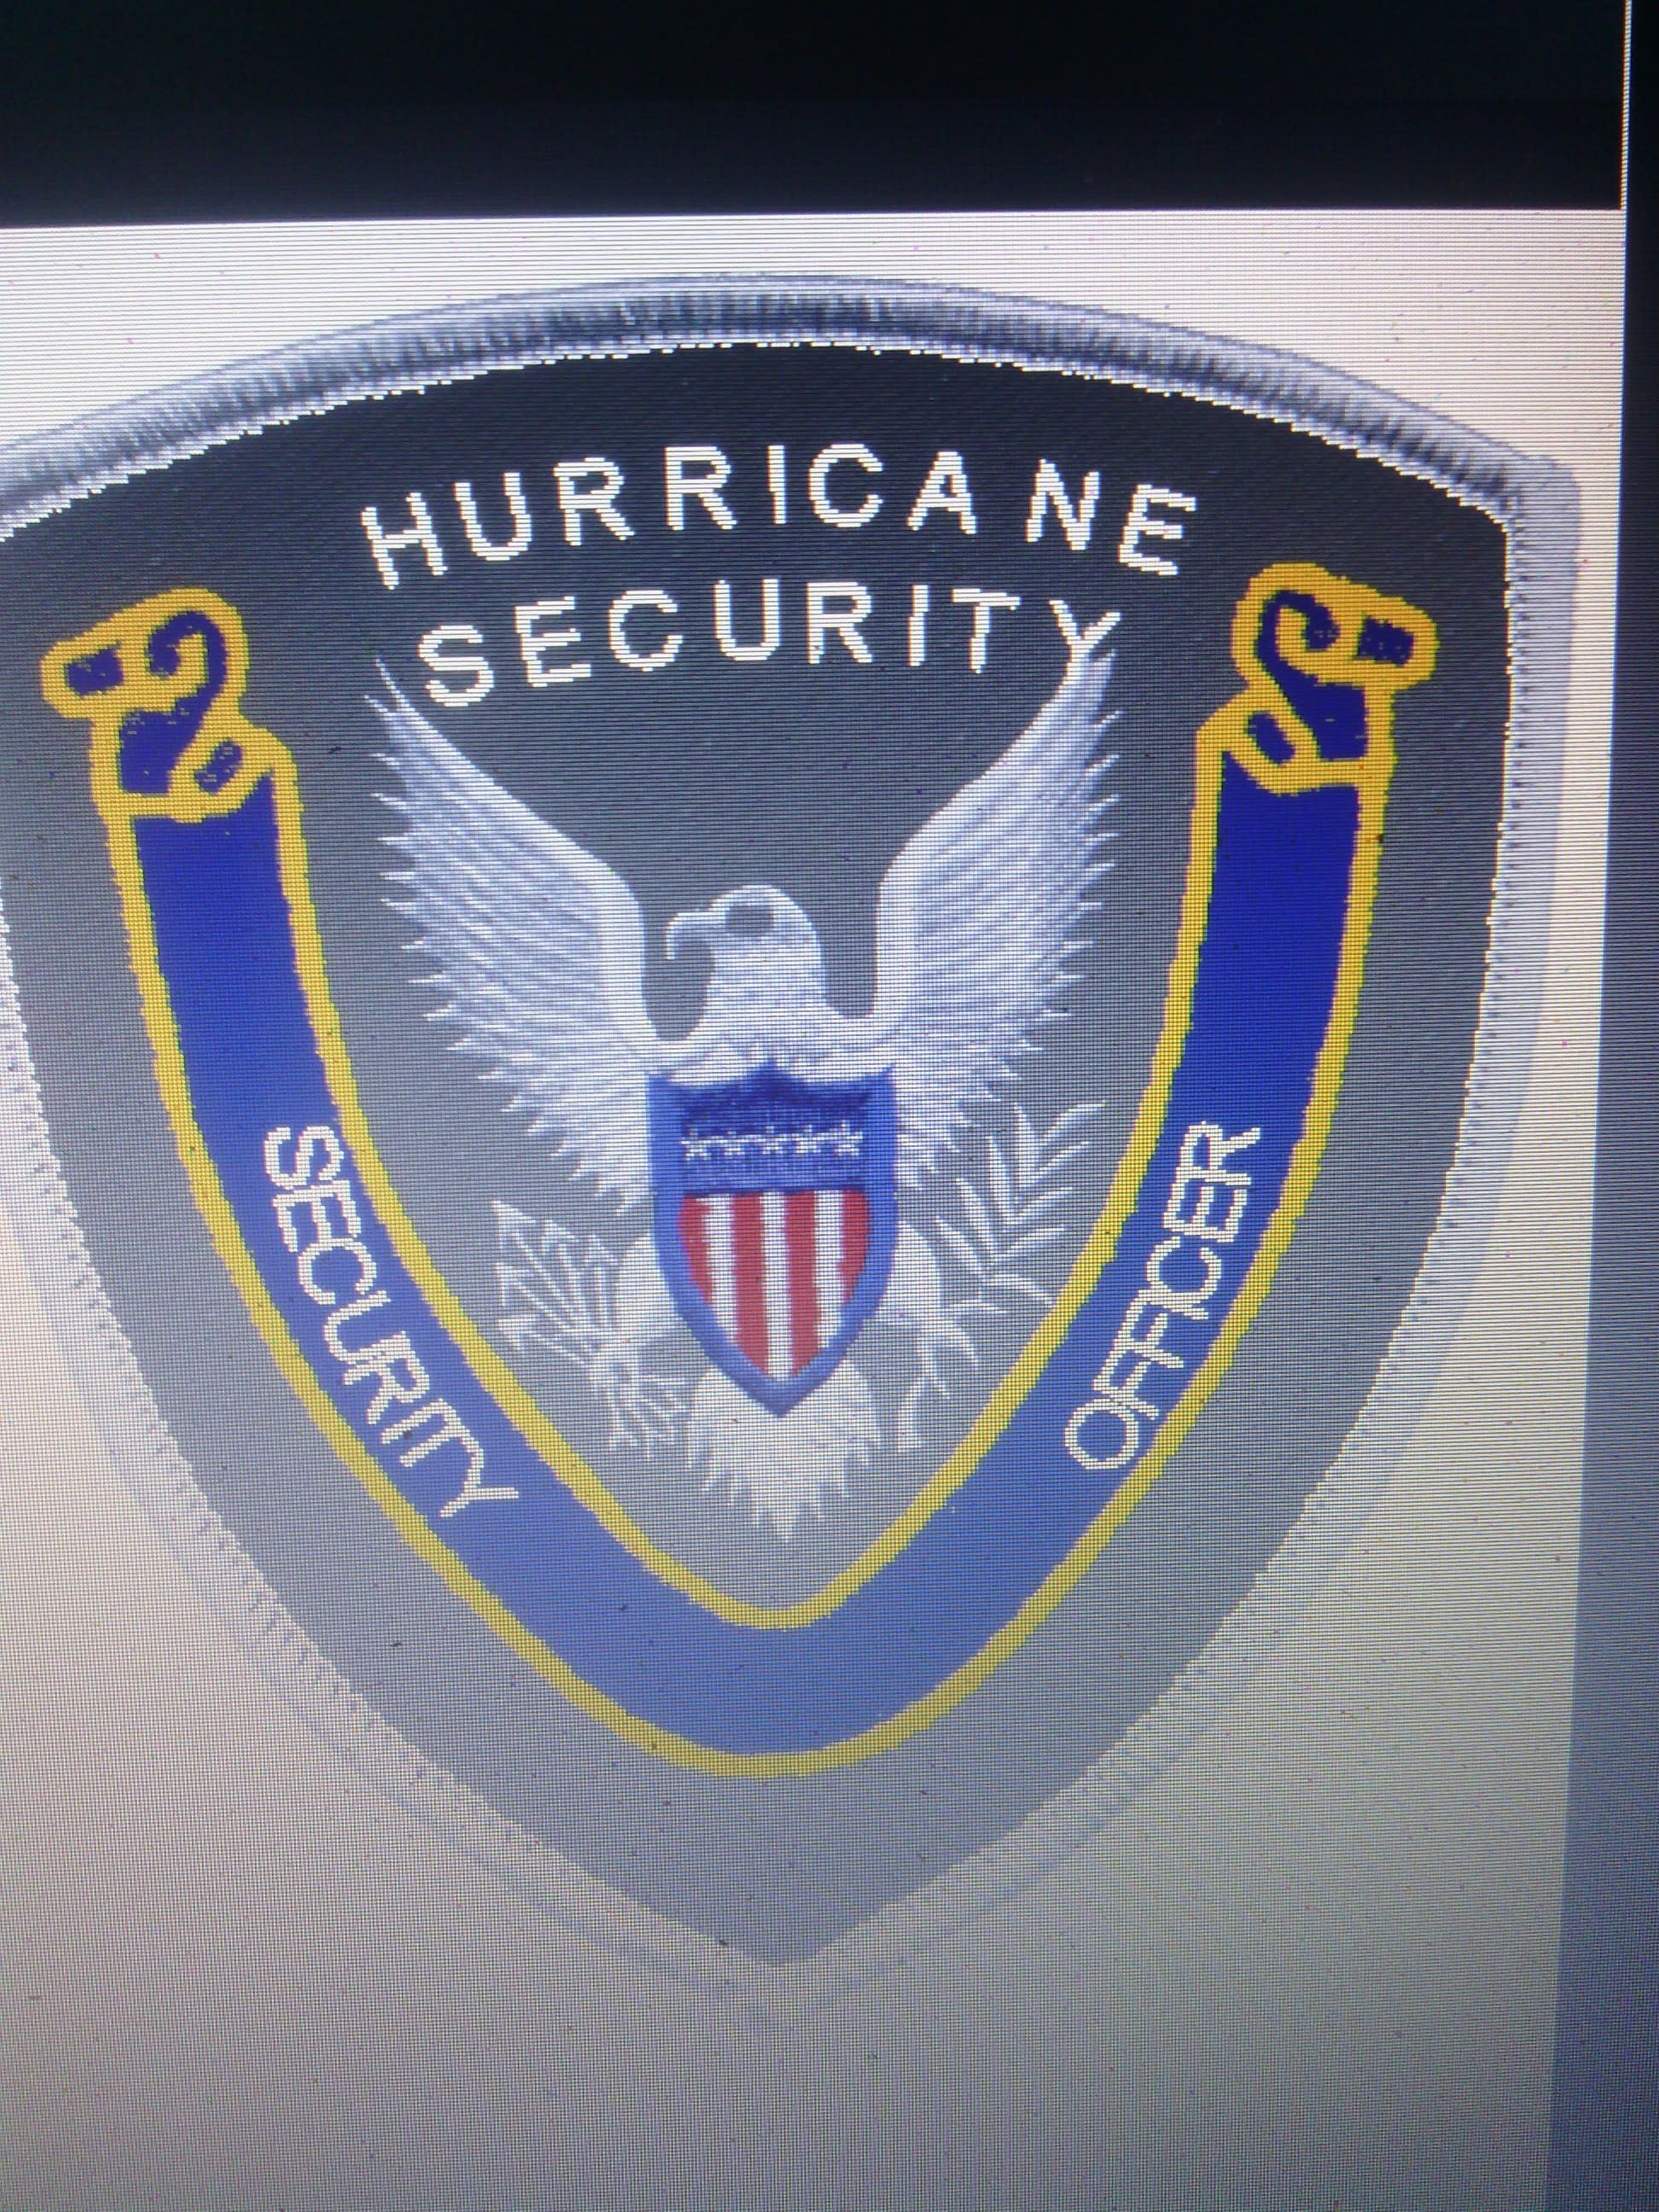 Hurricane Security